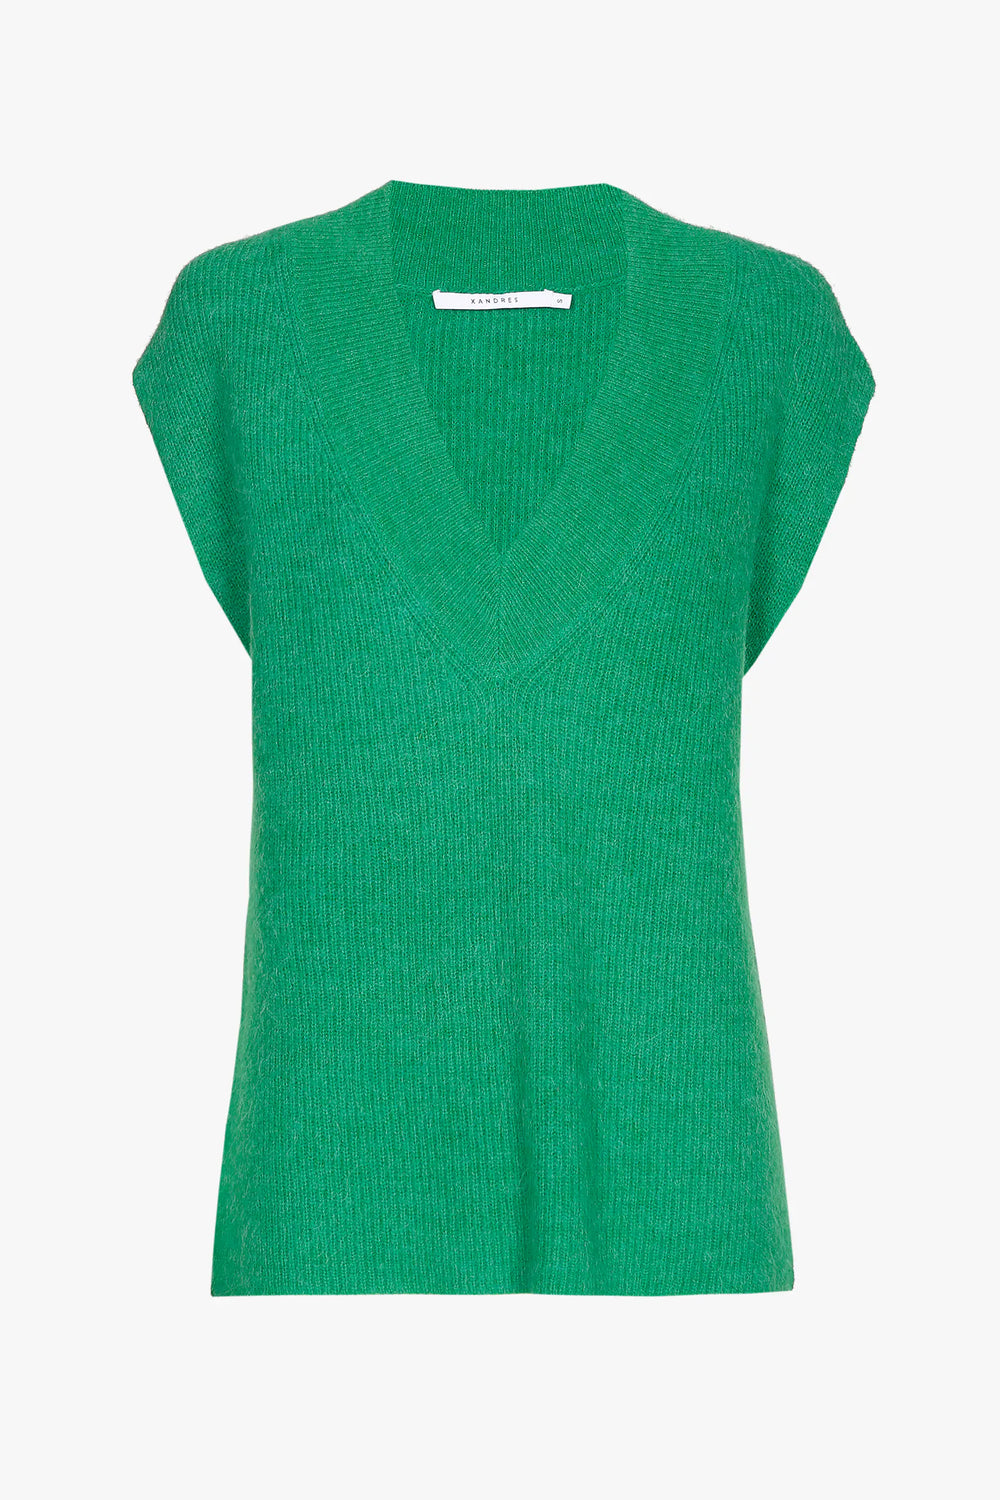 Irish green debardeur van alpaca mix - xandres - - grote maten - dameskleding - kledingwinkel - herent - leuven